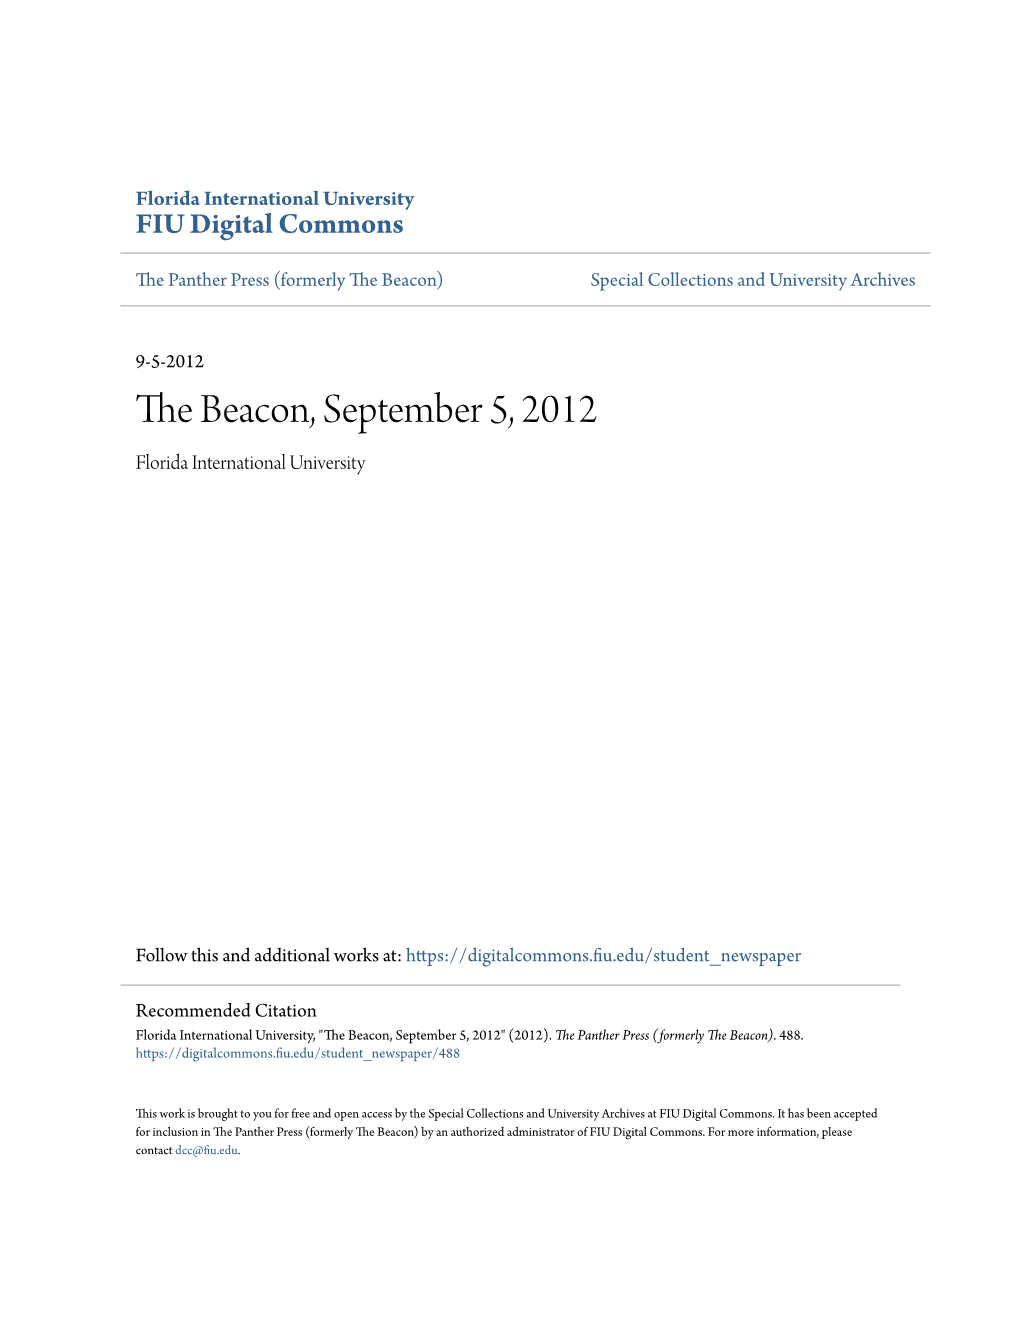 The Beacon, September 5, 2012 Florida International University